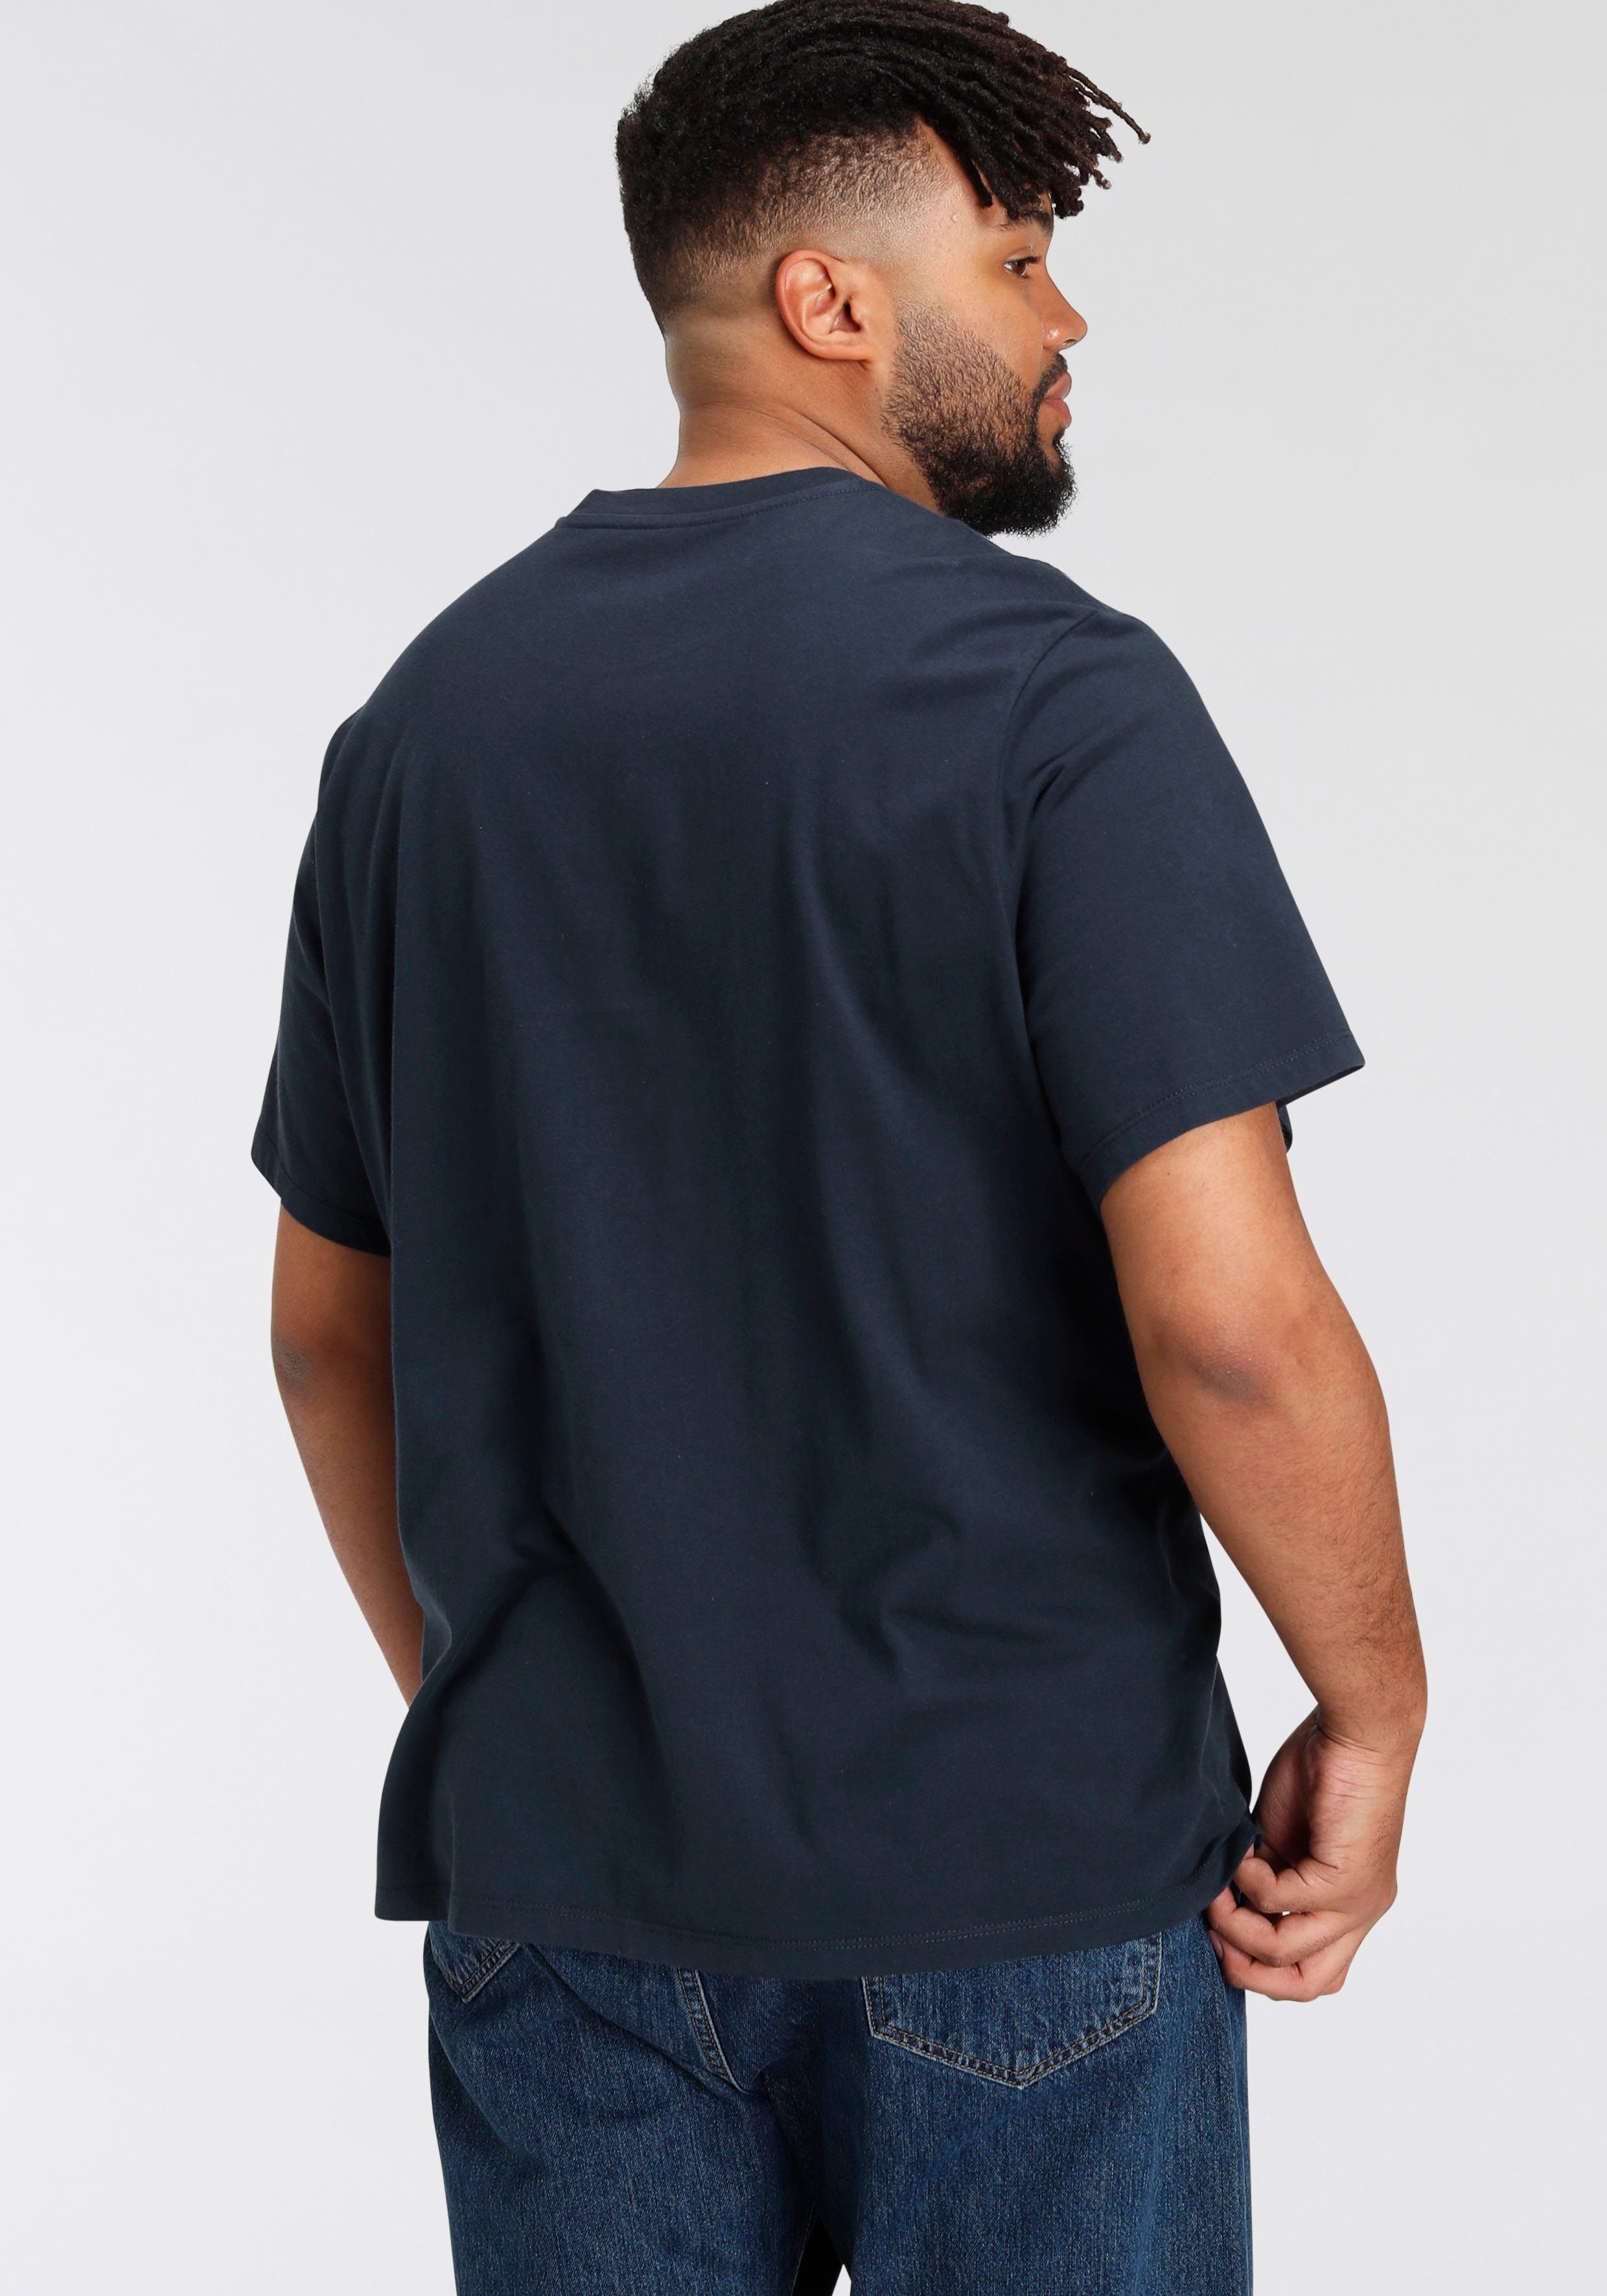 DRESS GRAPHIC BIG BLUES BIG Plus T-Shirt mit B&T Levi's® LE GRAPHIC TEE Logofrontprint TEE